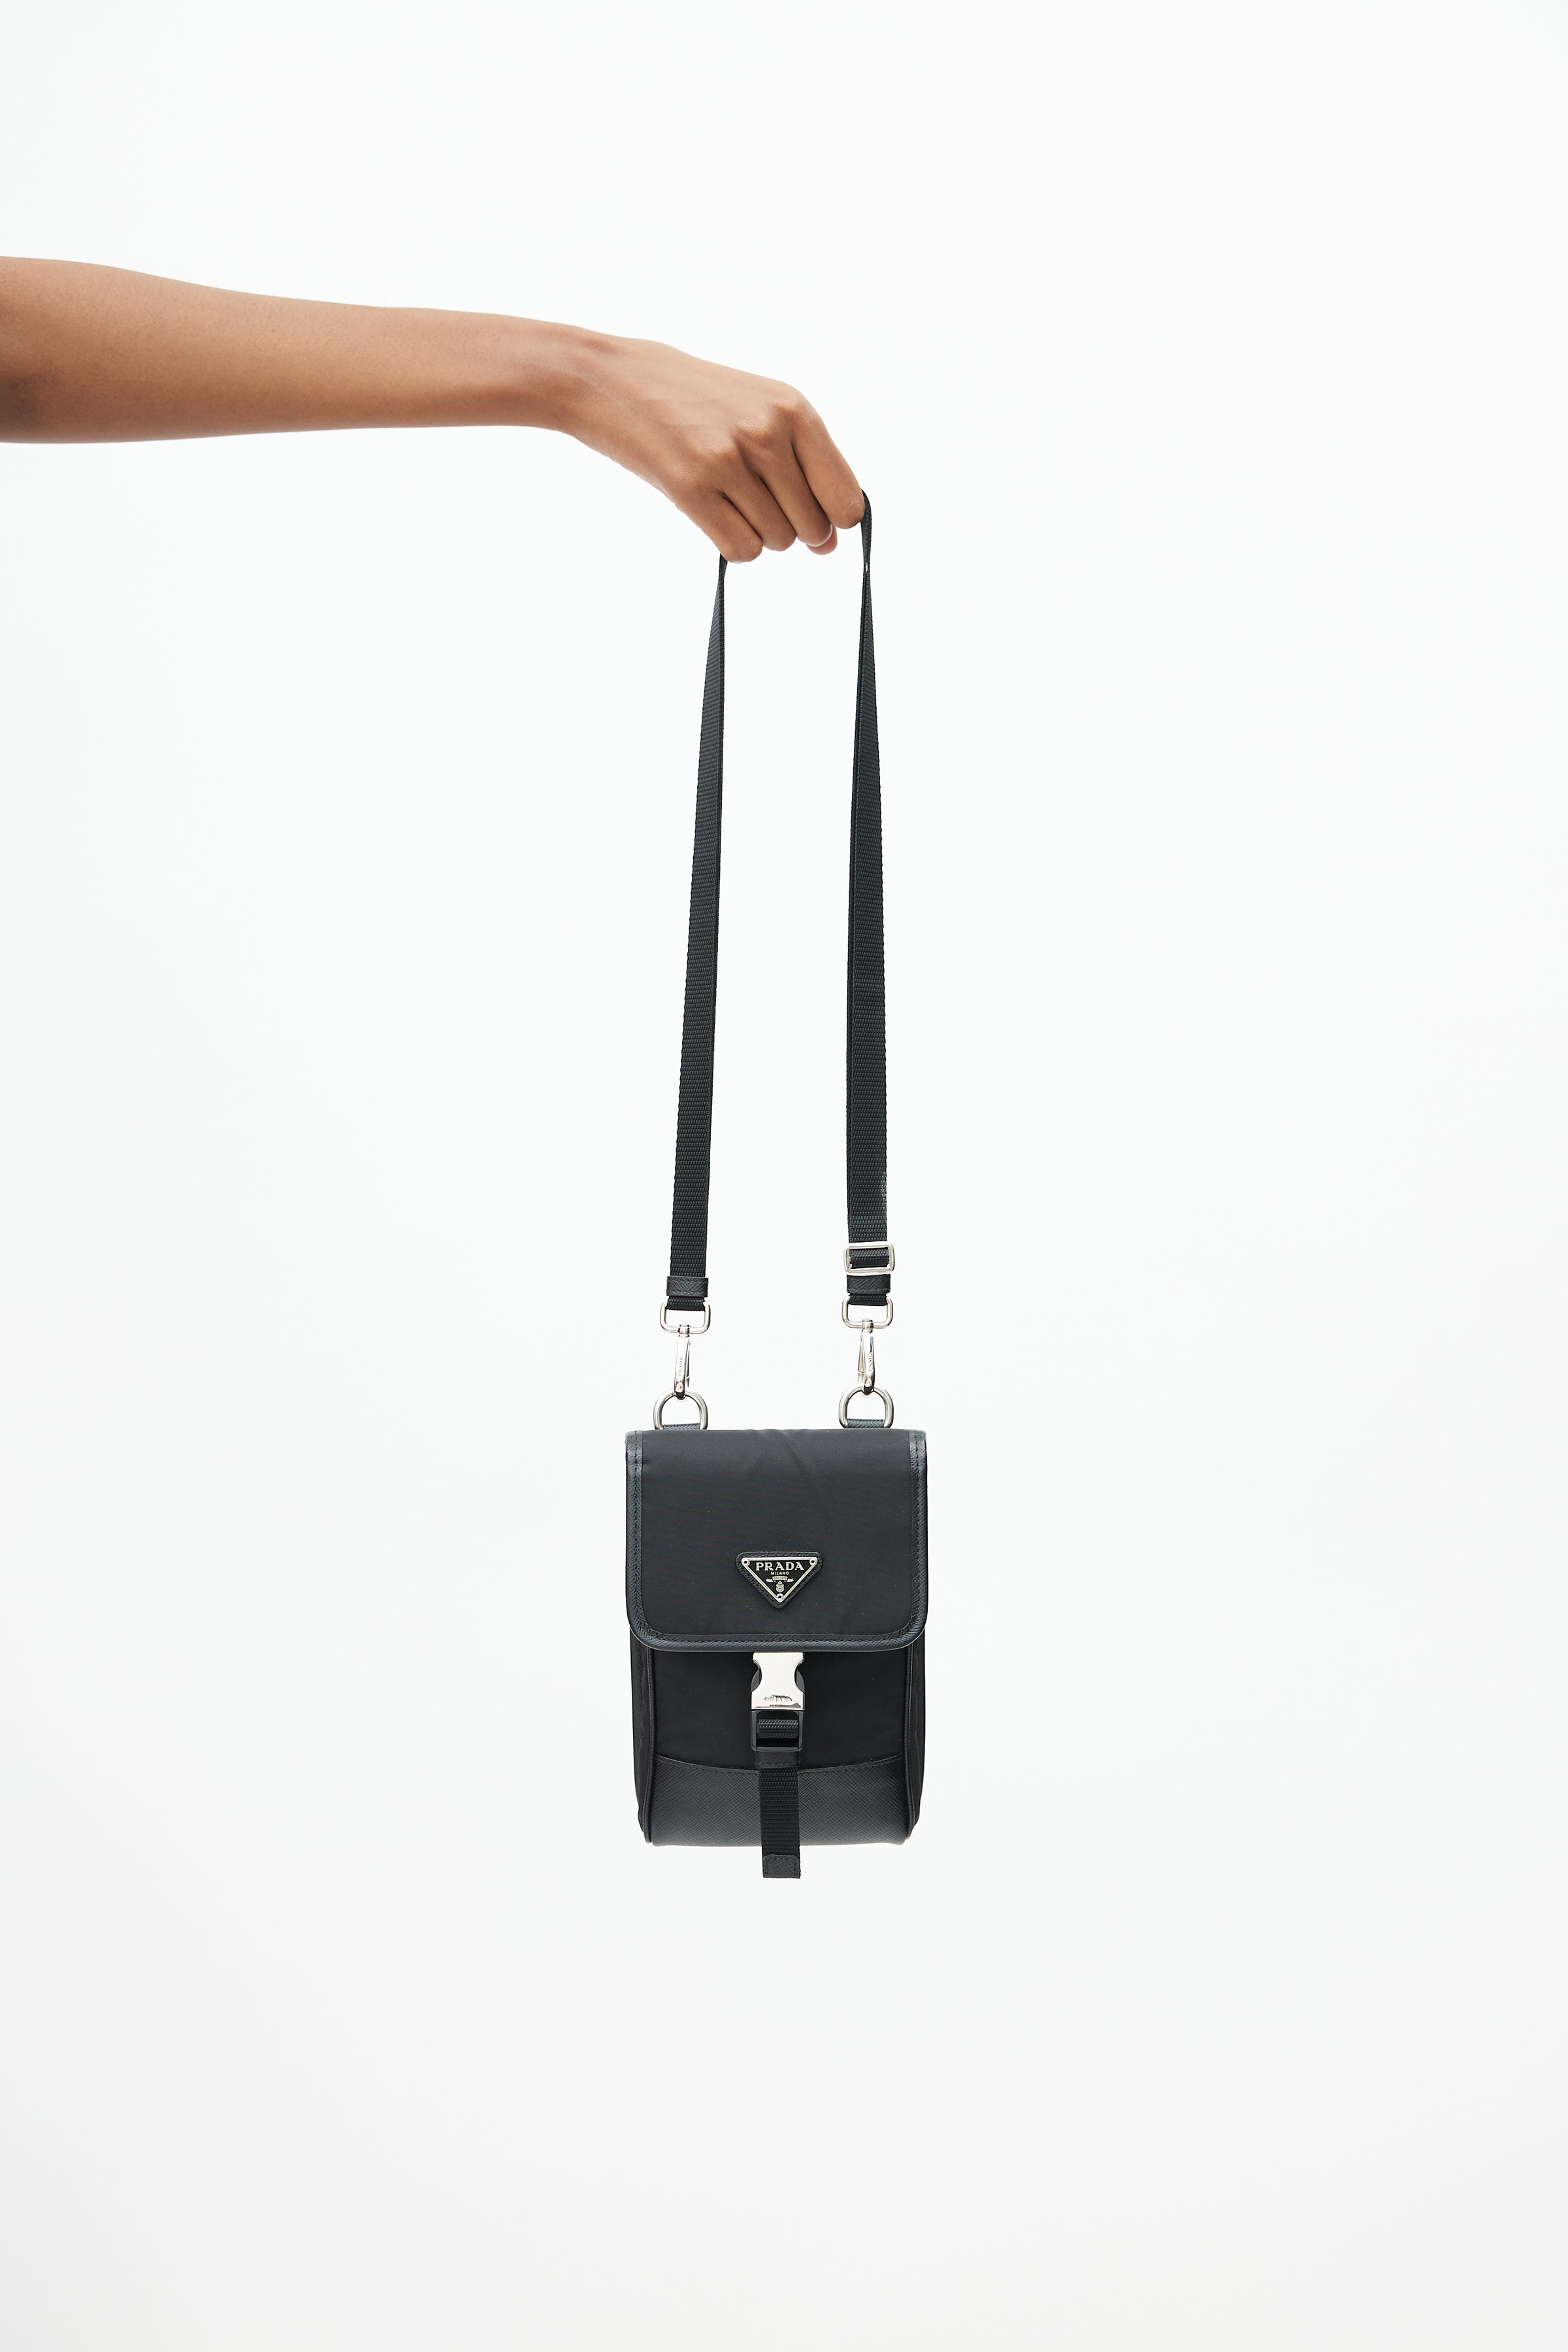 Prada Re-Nylon Saffiano Leather Crossbody Bag Black